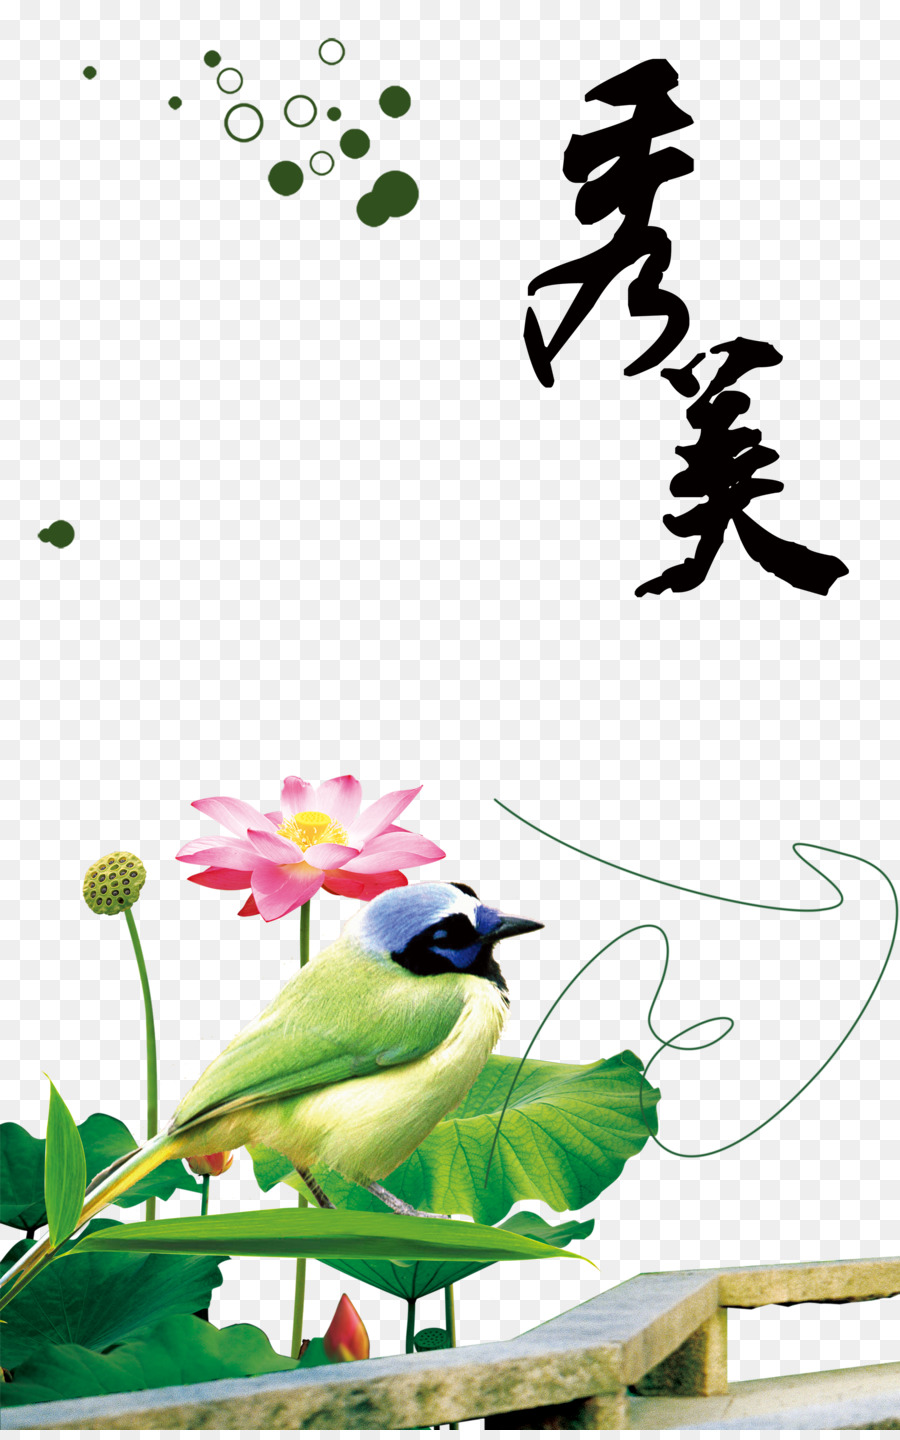 Cina, Google Immagini - Lotus stile Cinese